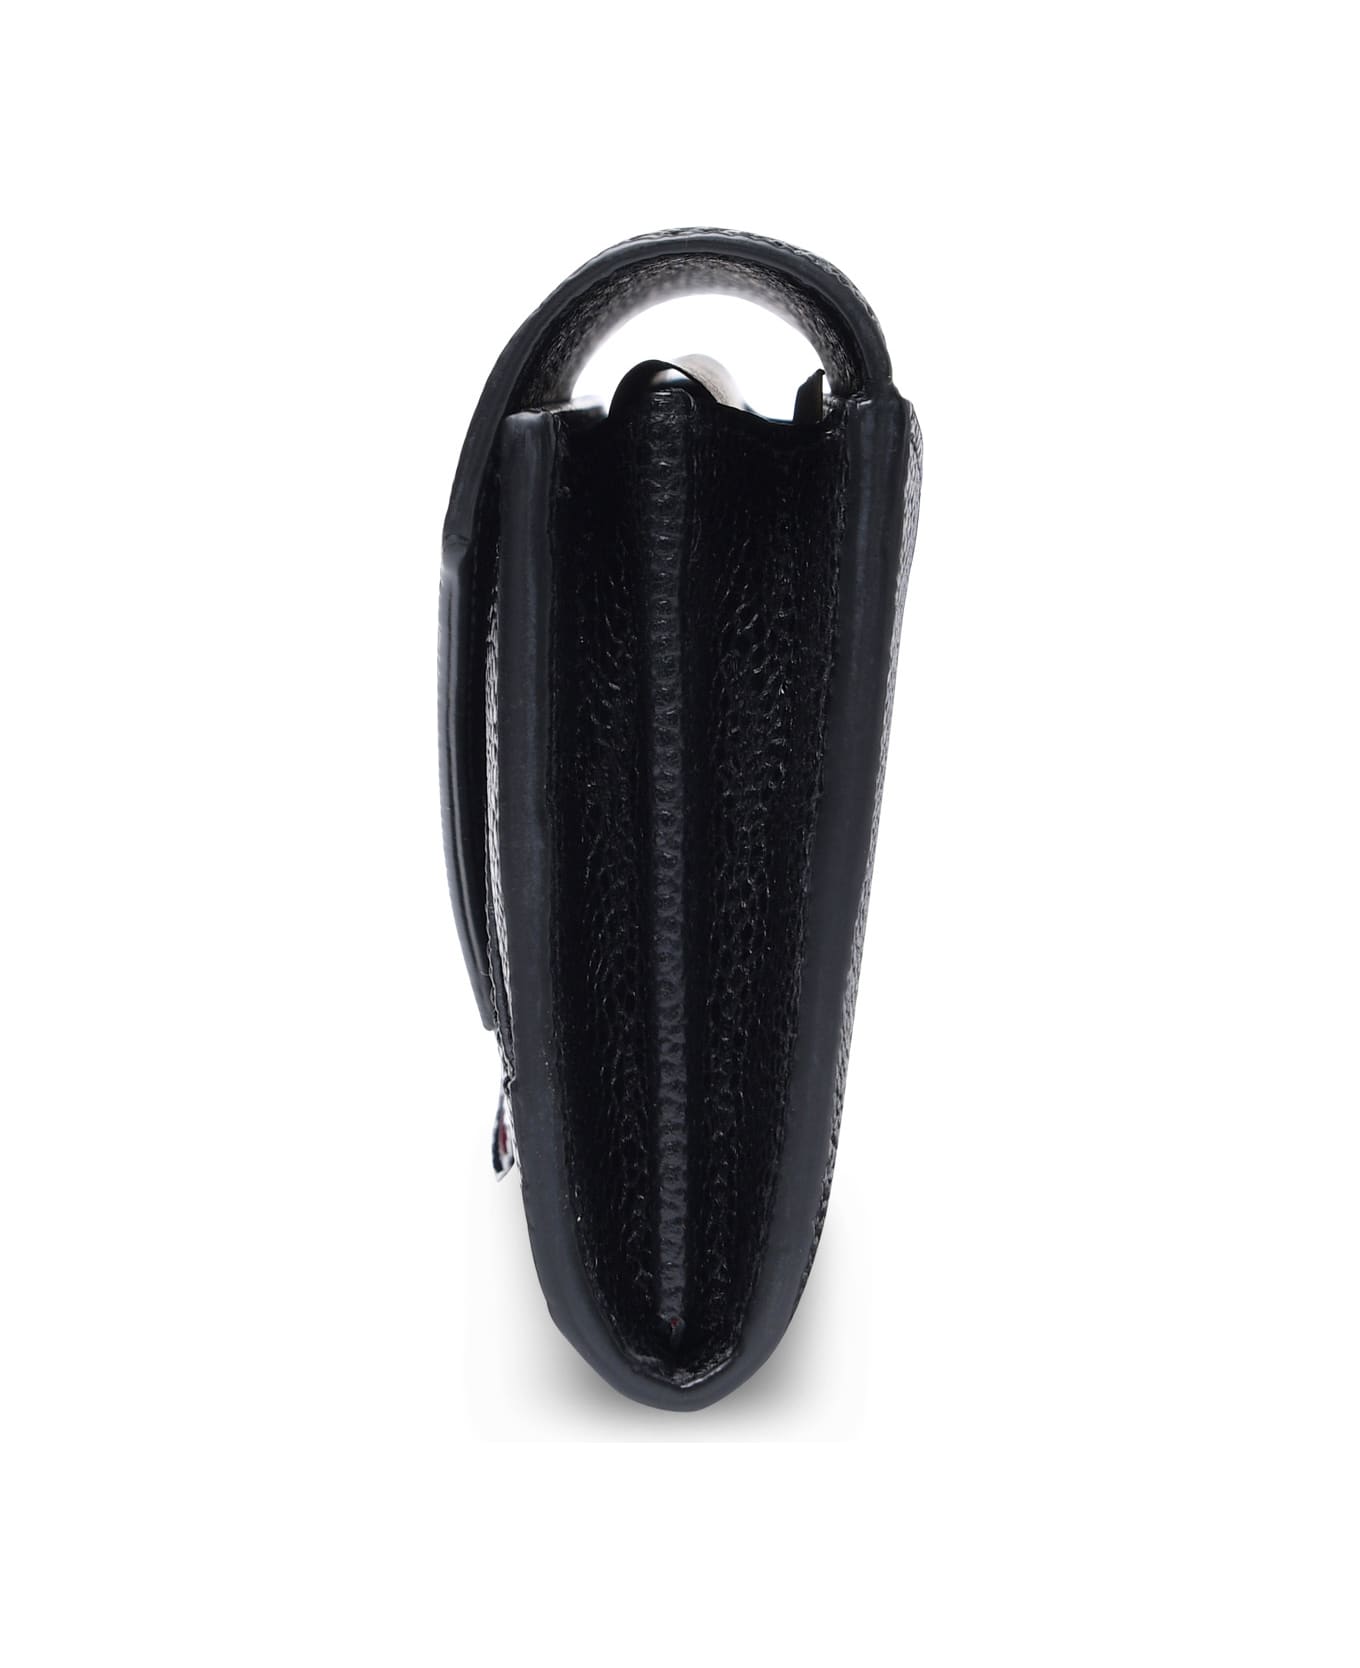 Thom Browne Black Grained Leather Wallet - Black